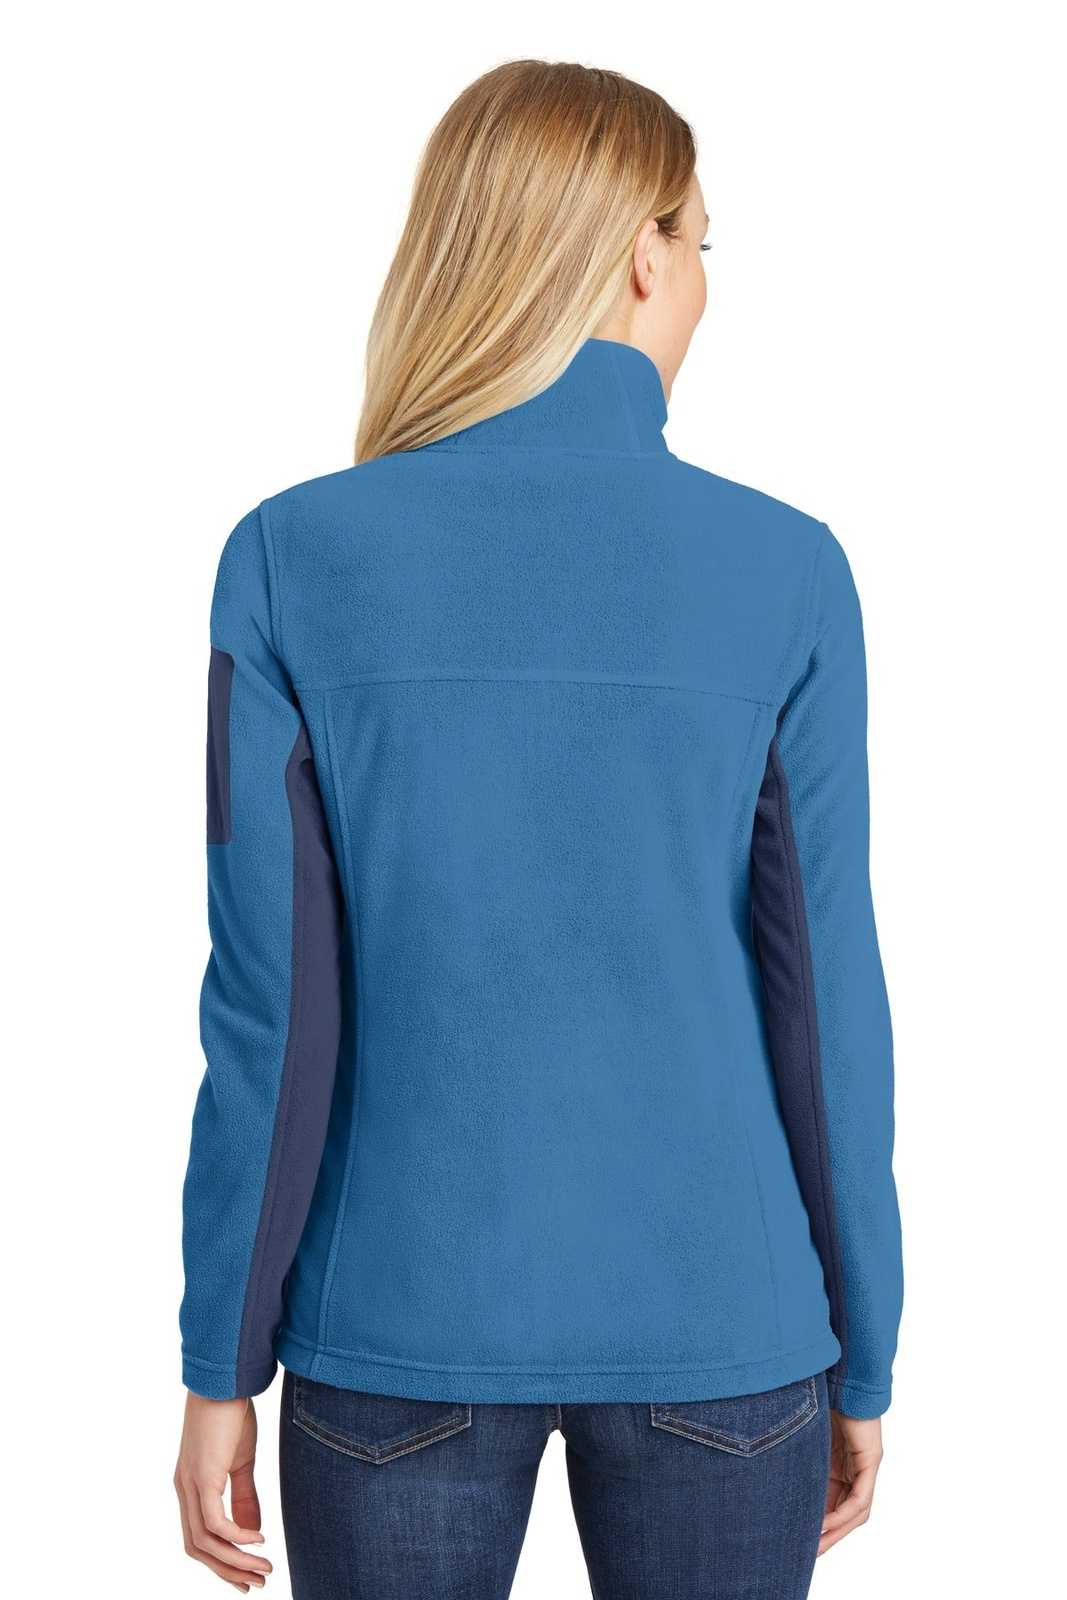 Port Authority L233 Ladies Summit Fleece Full-Zip Jacket - Regal Blue Dress Blue Navy - HIT a Double - 2